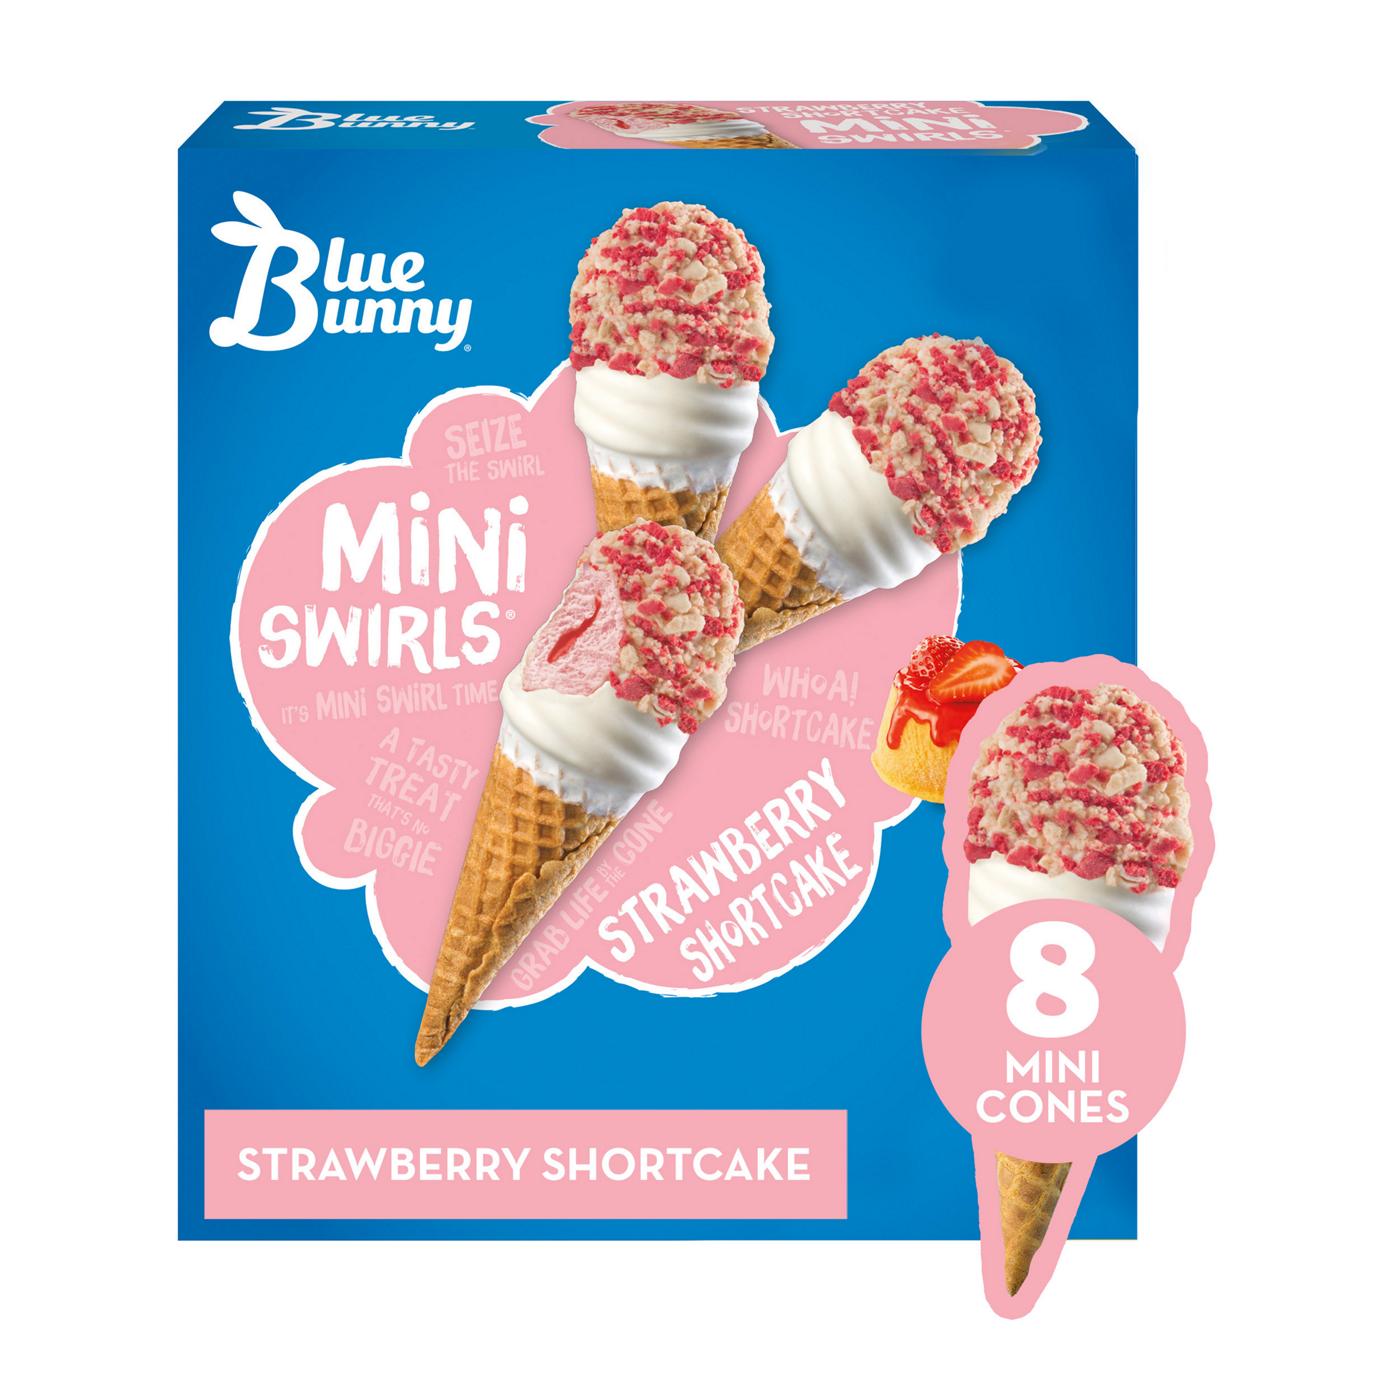 Blue Bunny Mini Swirls Strawberry Shortcake Ice Cream Cones; image 1 of 2